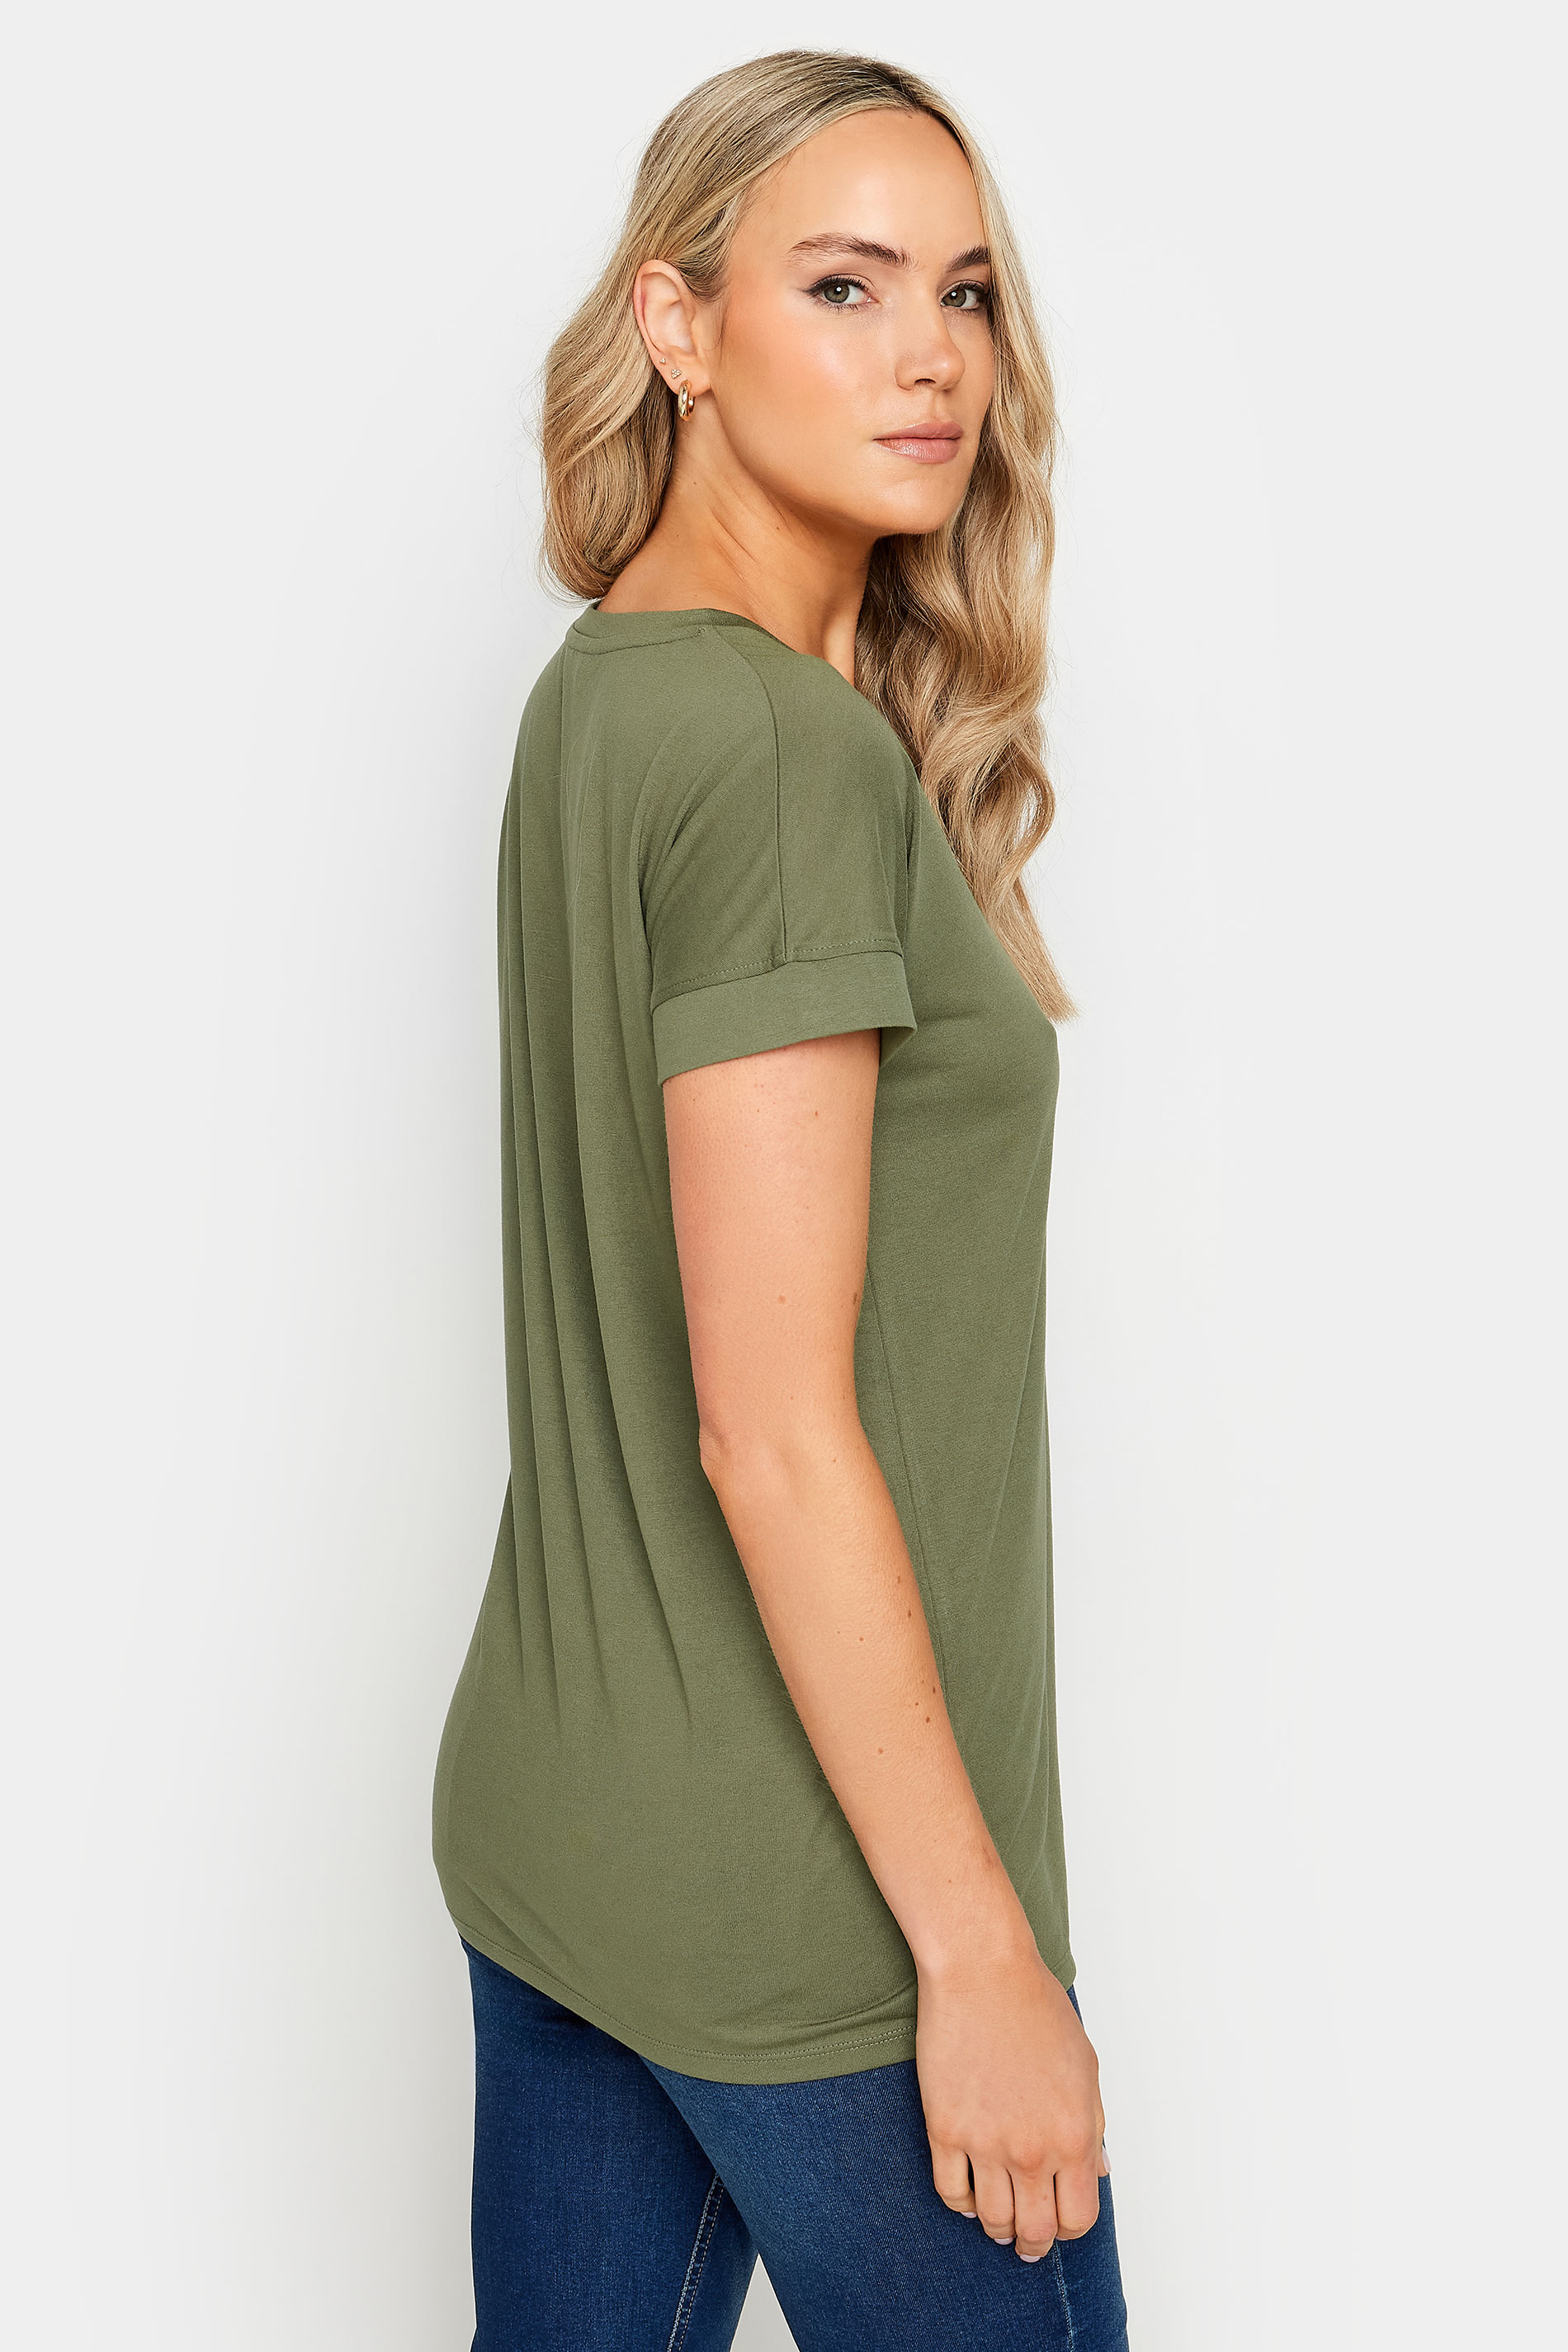 LTS PREMIUM Tall Women's Khaki Green V-Neck T-Shirt | Long Tall Sally 3